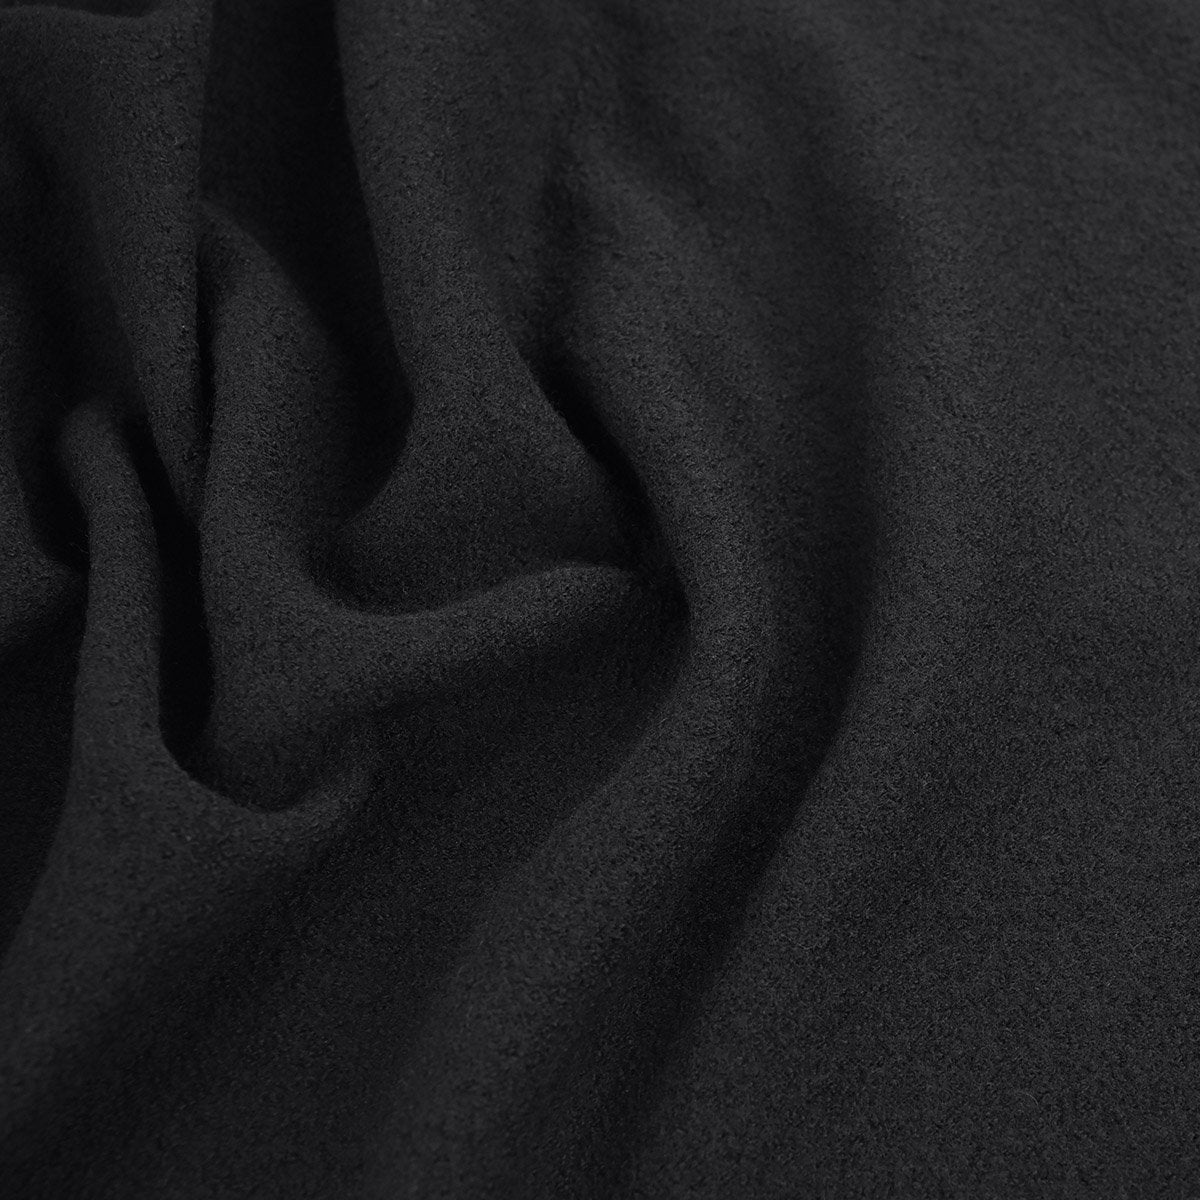 Black Curly Coating Fabric 97516